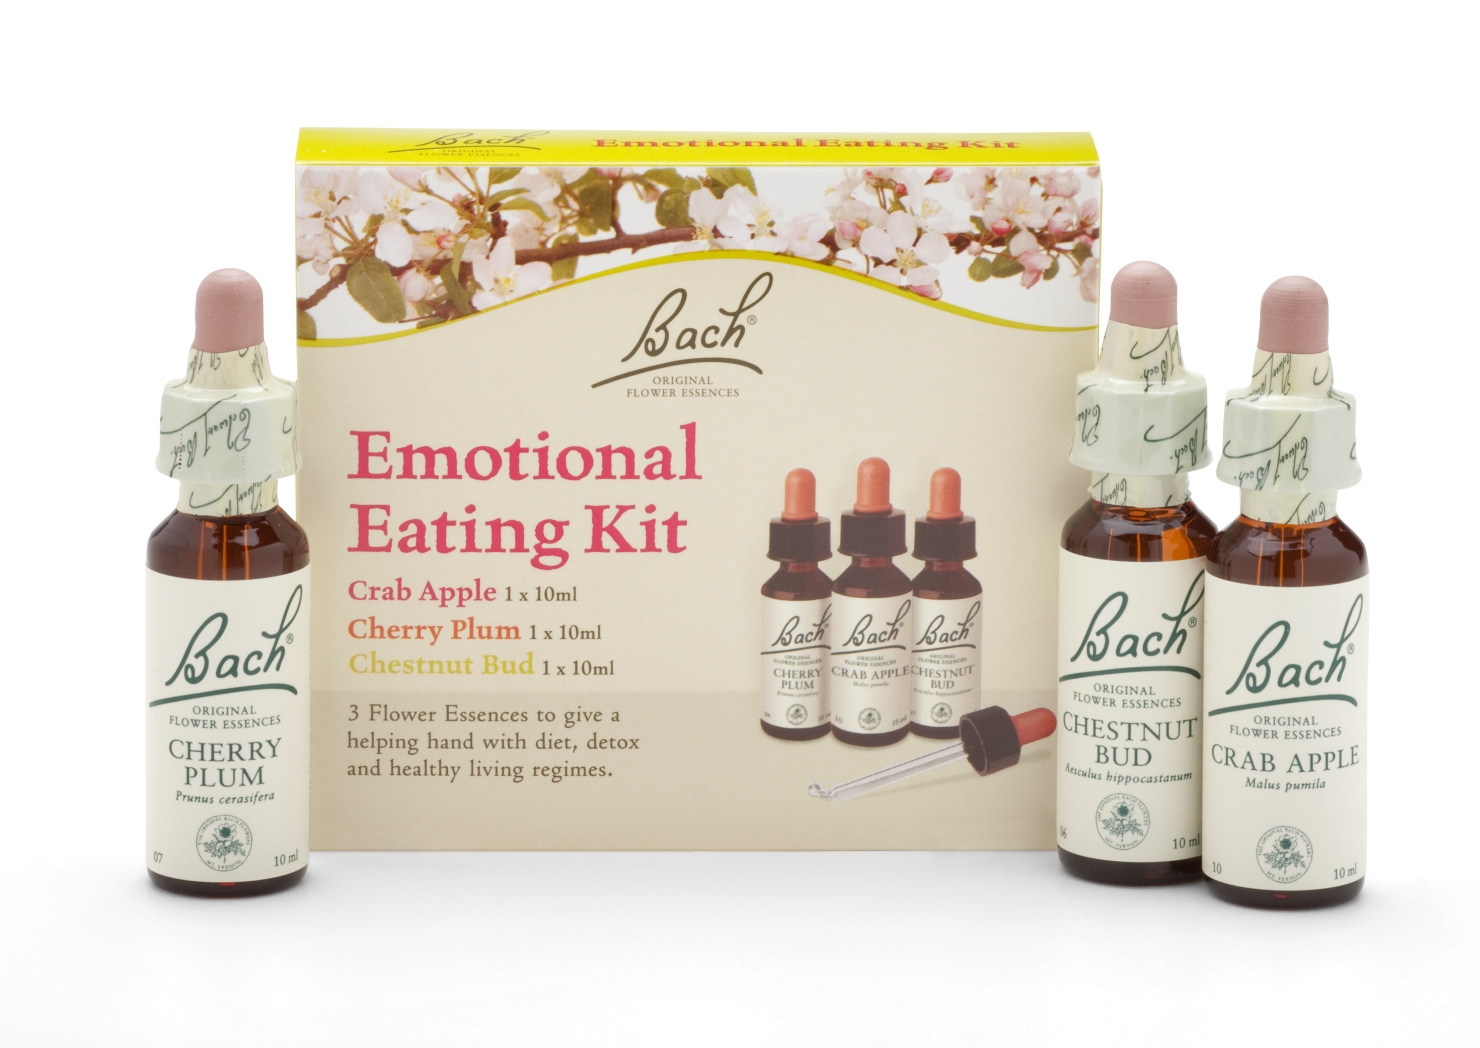 Bach emotional eating kit